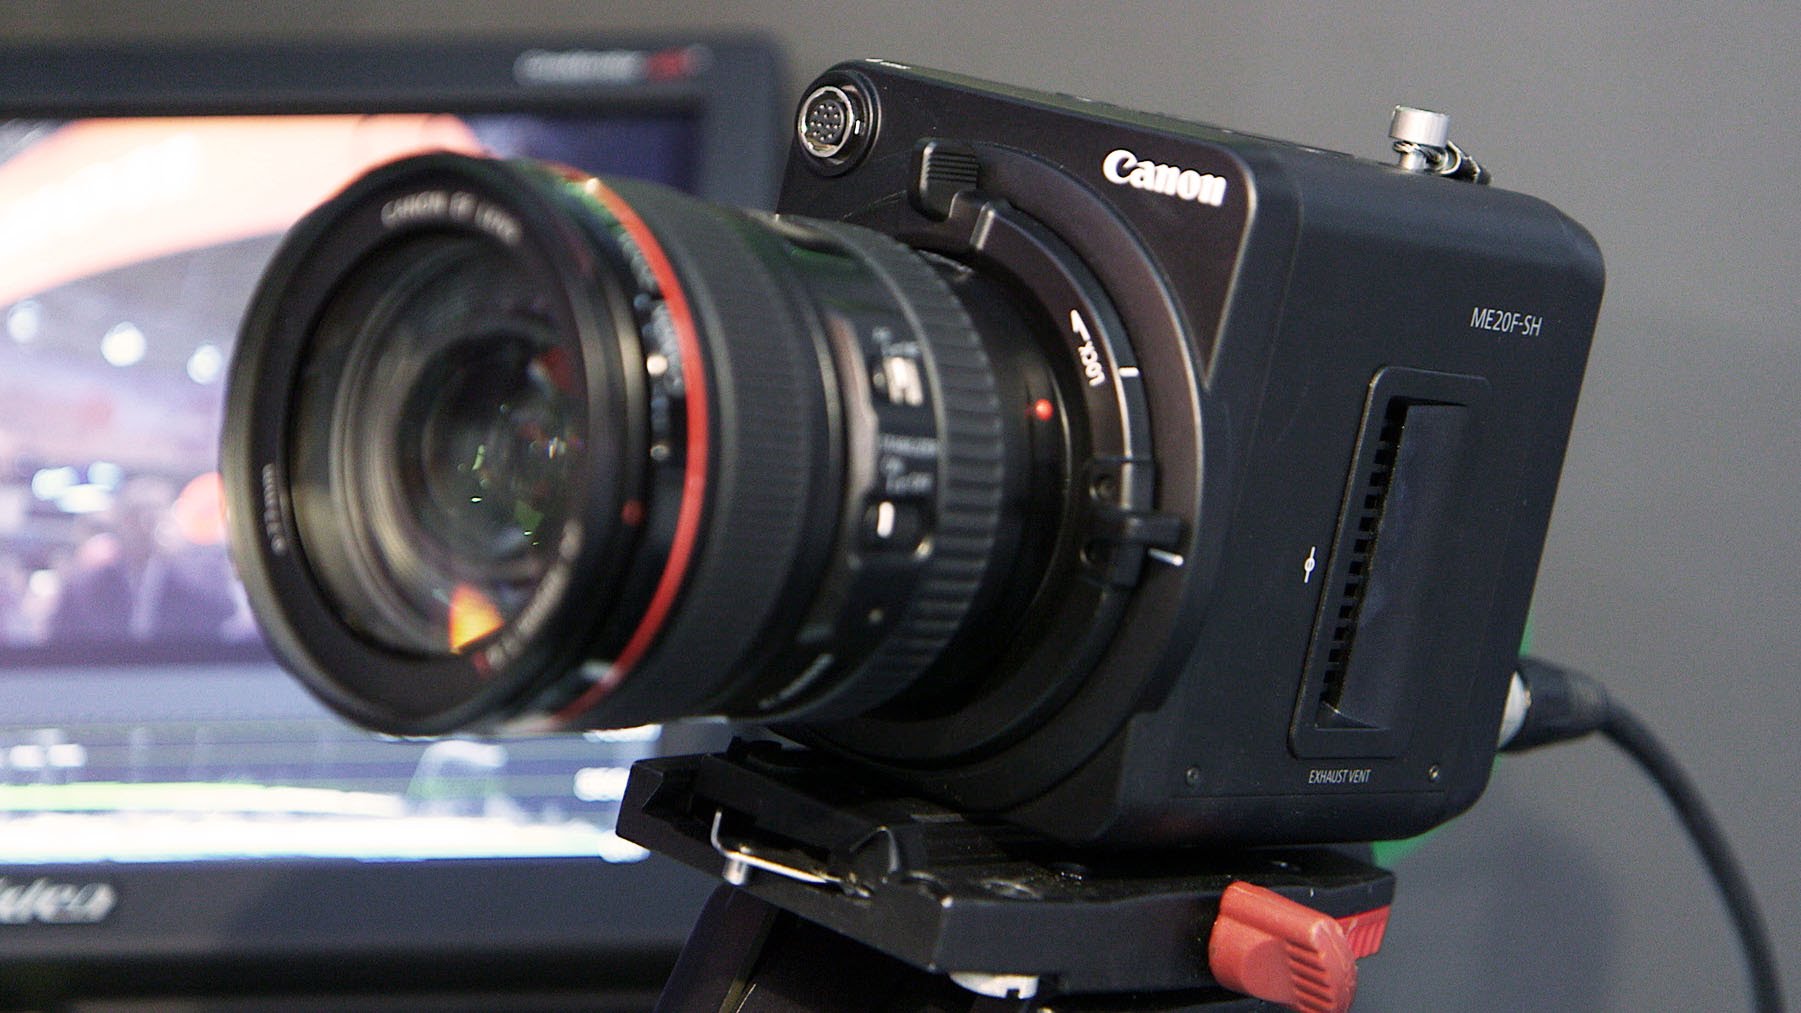 IBC2015: Canon ME20F-SH Camera with 4 million ISO